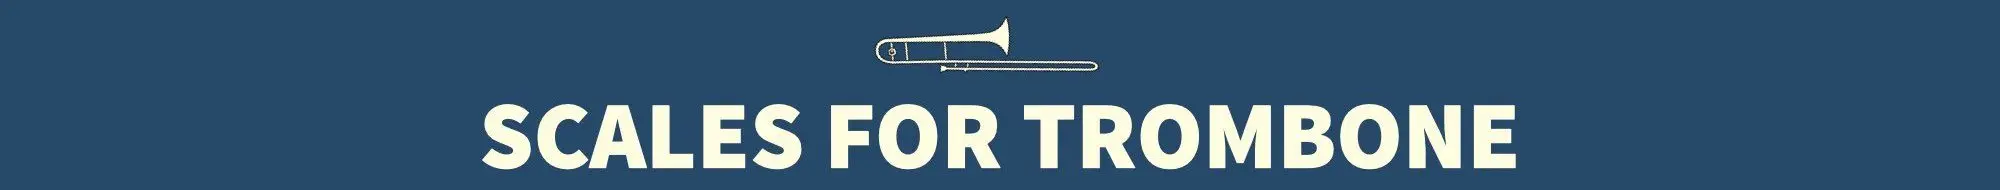 Trombone scales sheet music